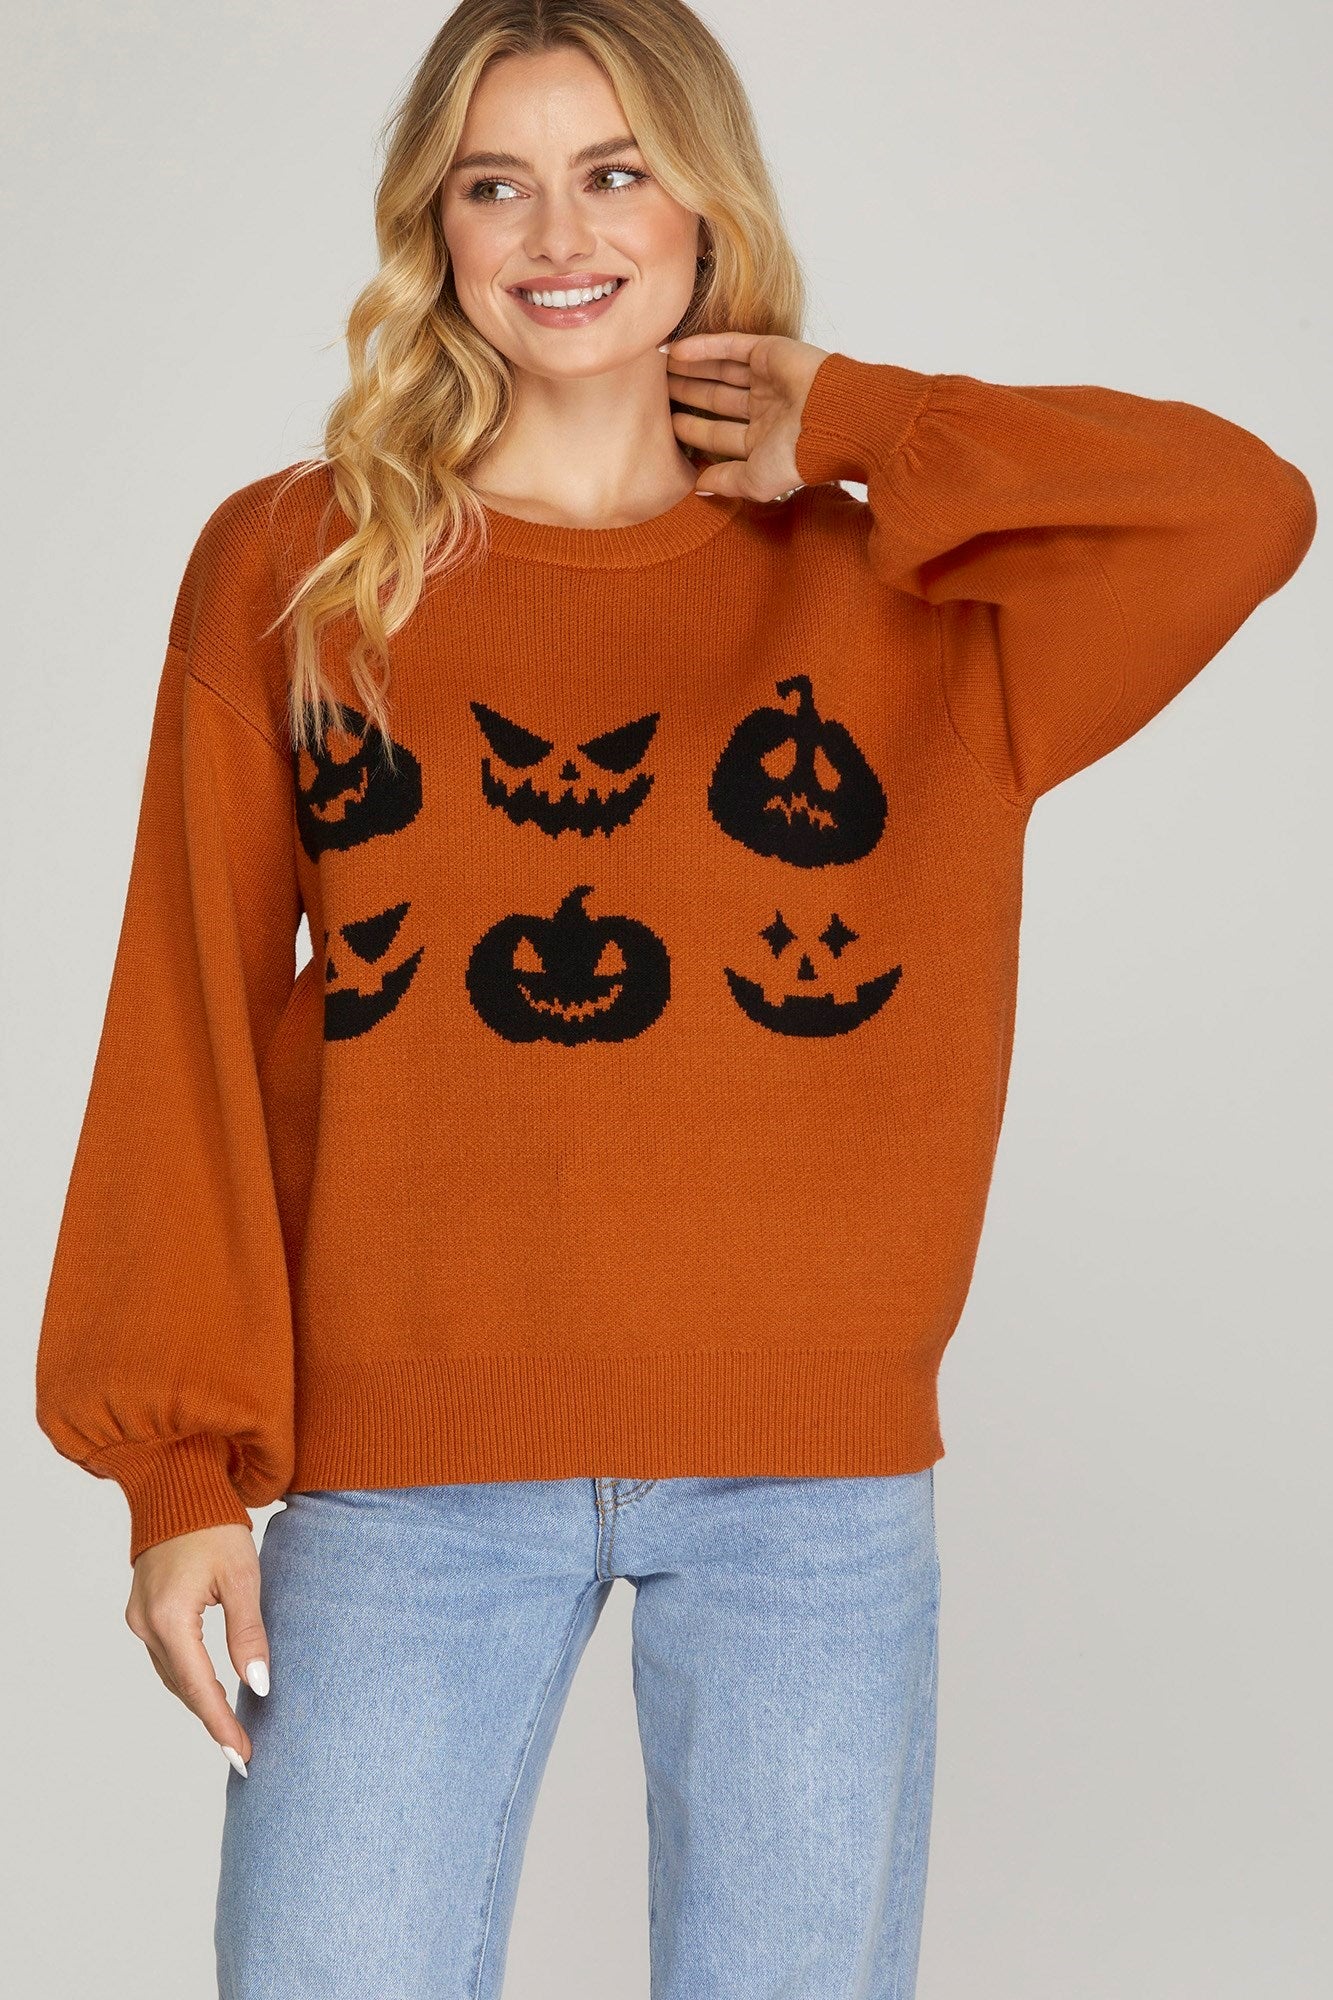 Jack O' Lantern Sweater